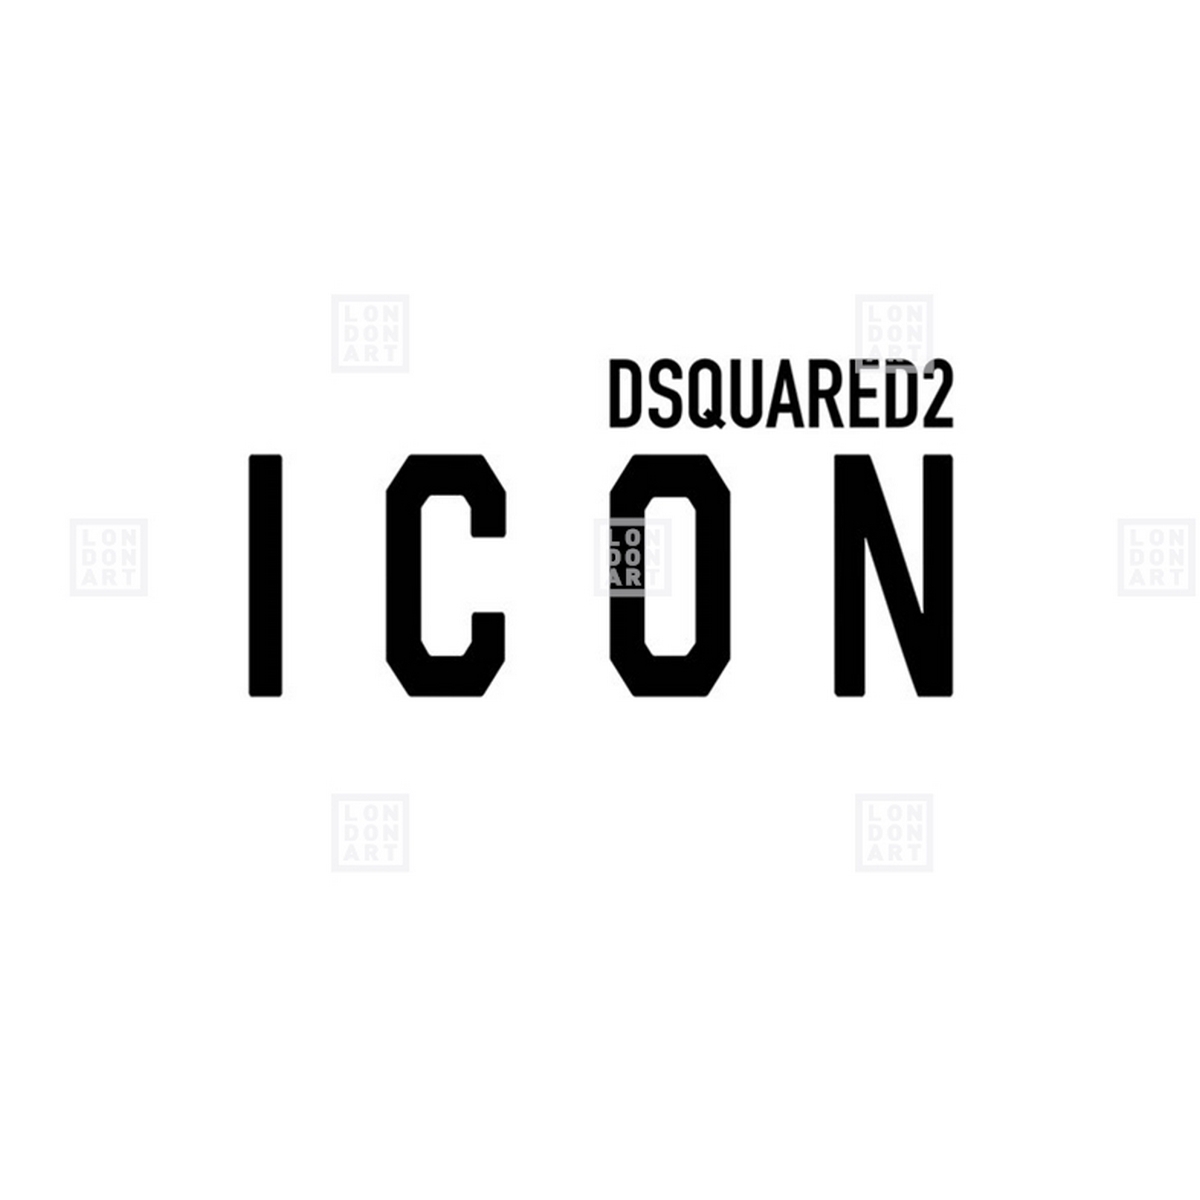 ICON DSQ2W10-01